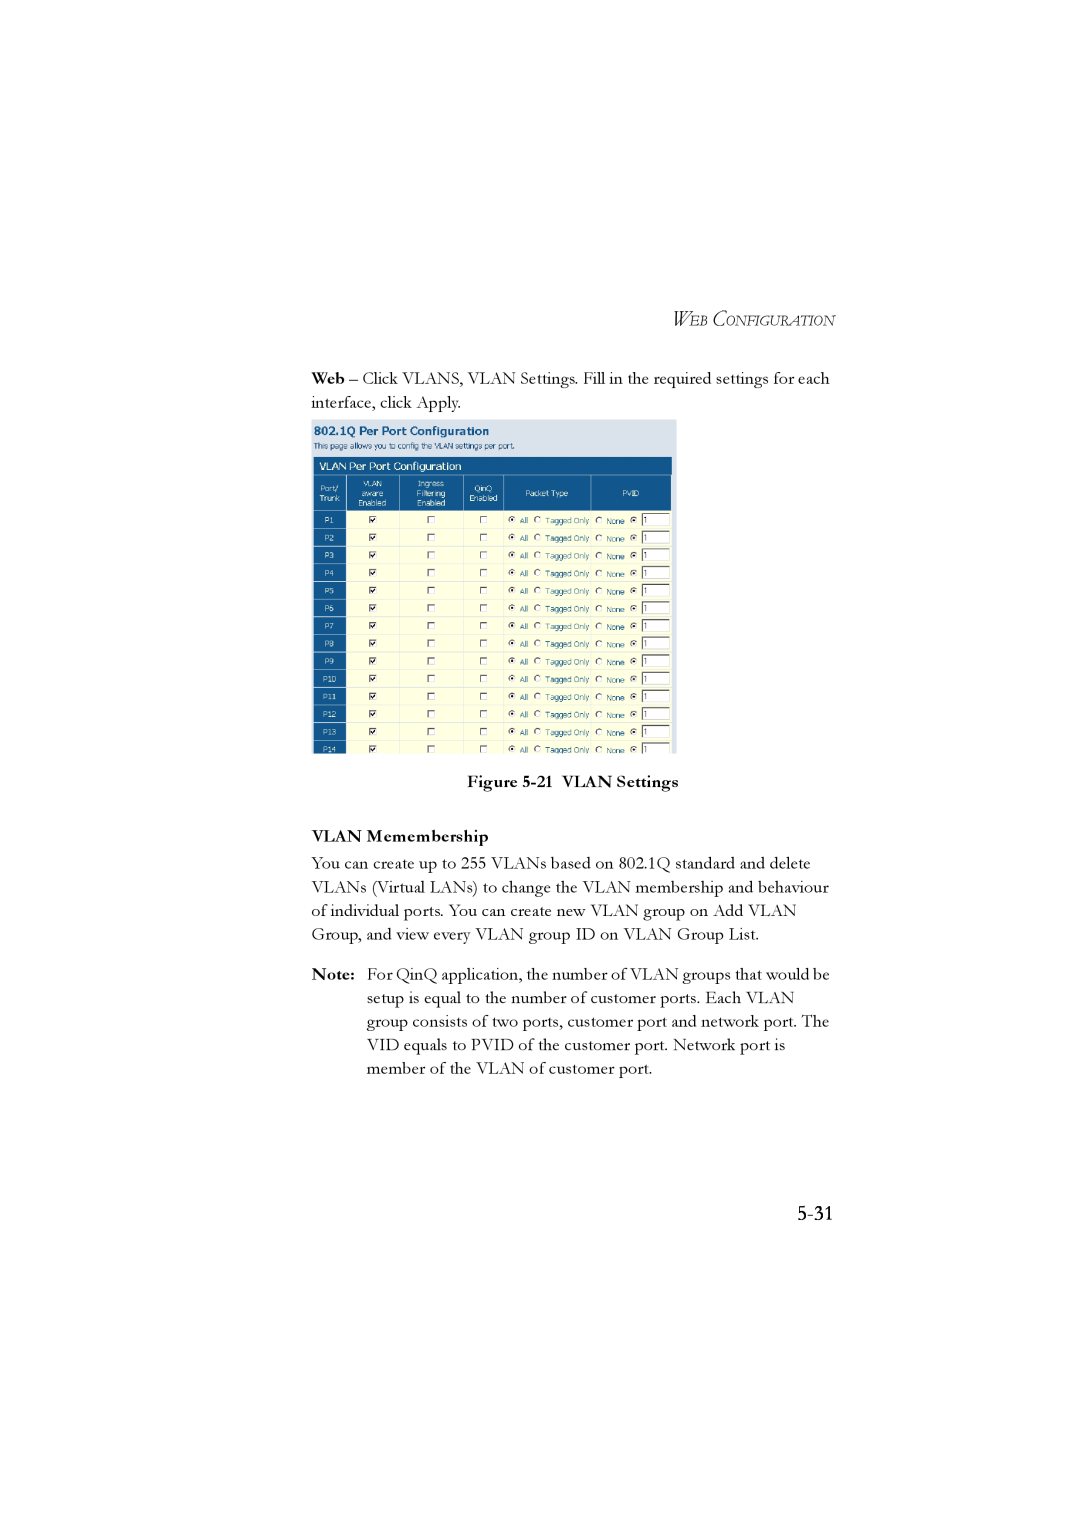 LevelOne GSW-2476 user manual 5-31, 21 VLAN Settings VLAN Memembership 